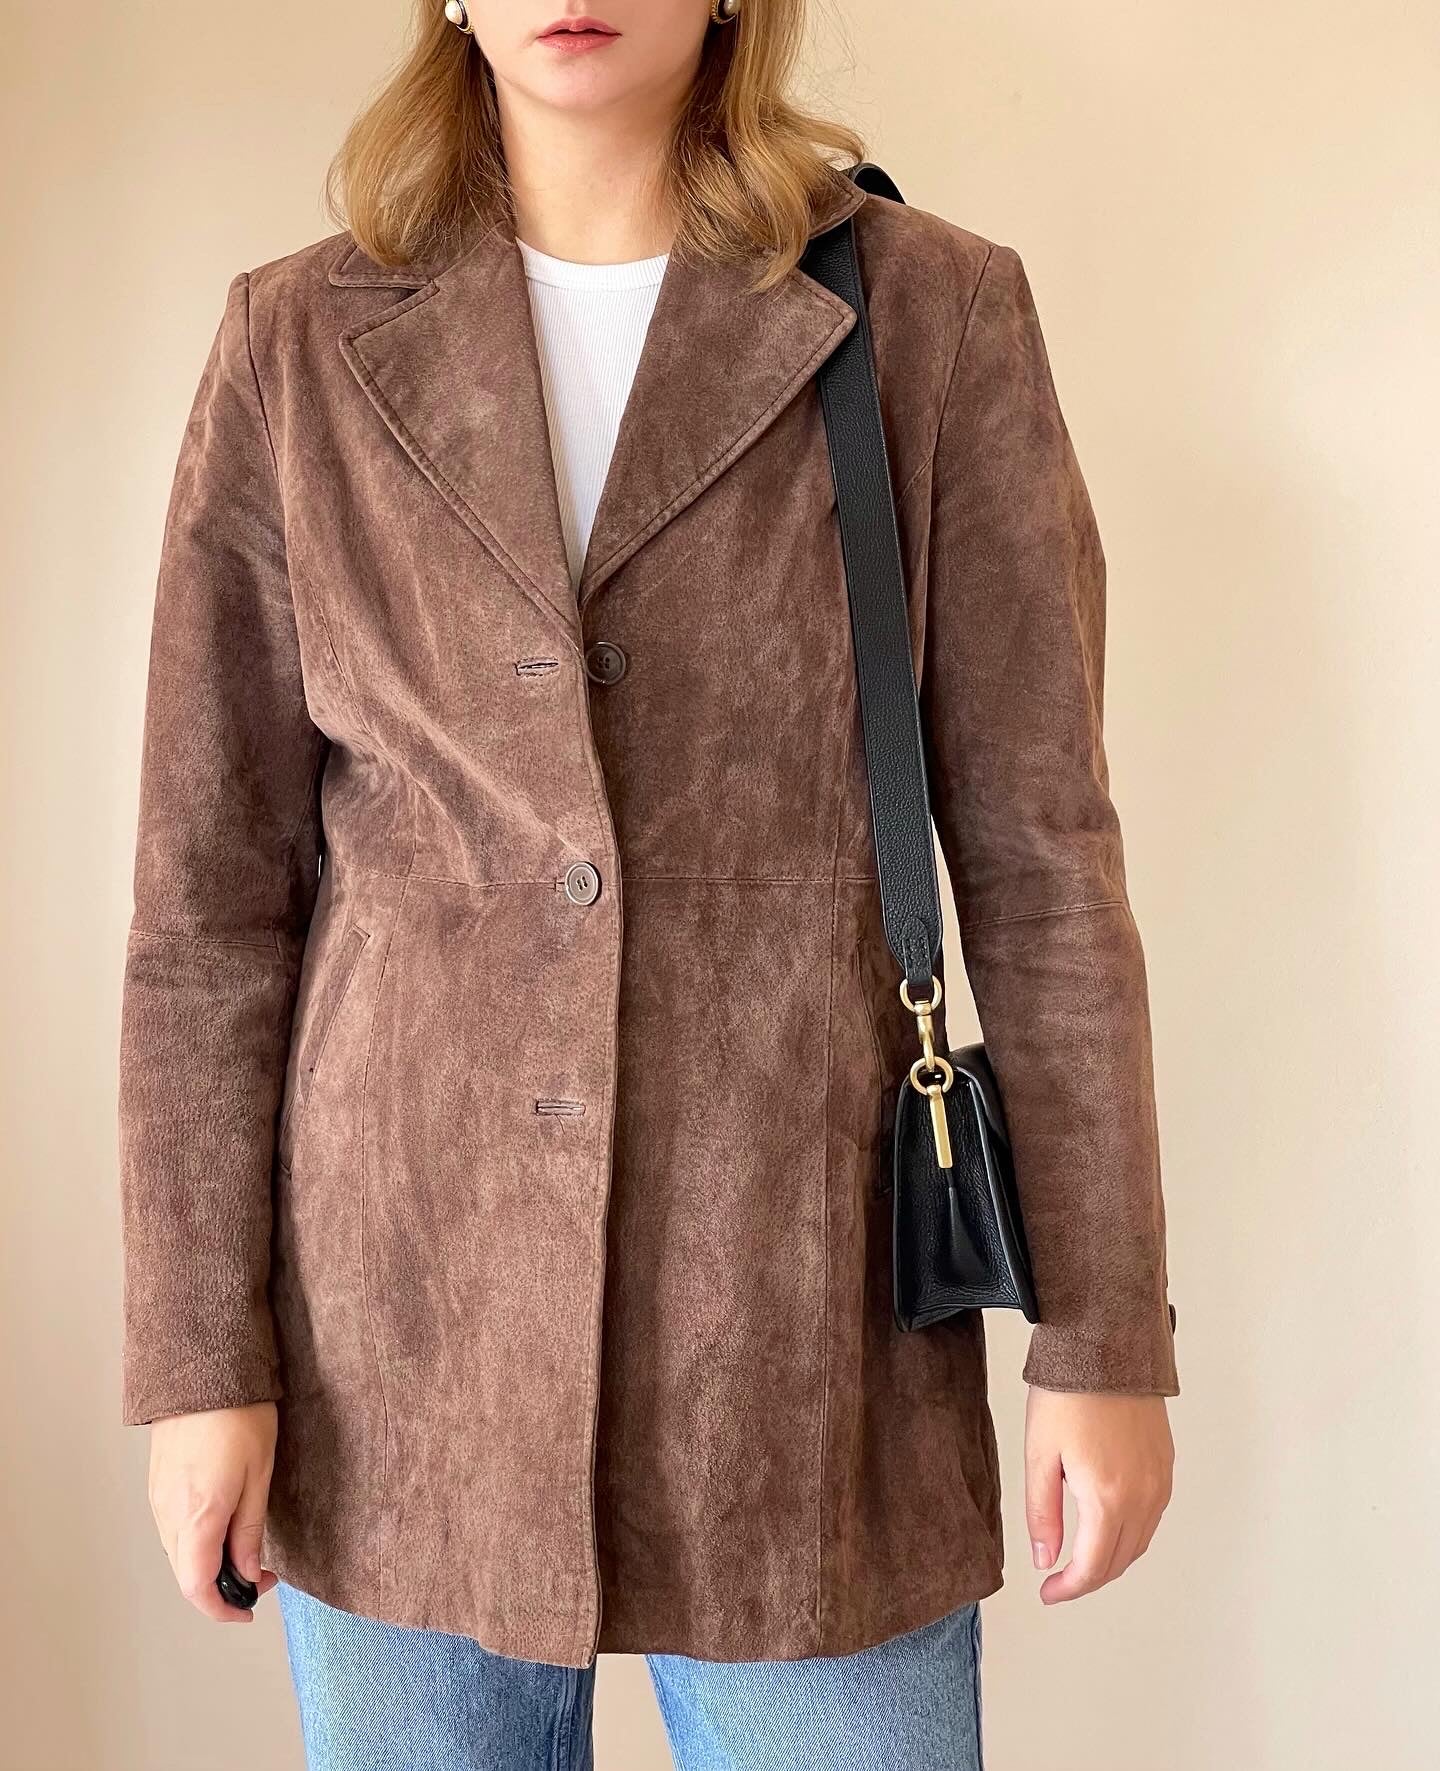 Vintage 100% suede leather long jacket